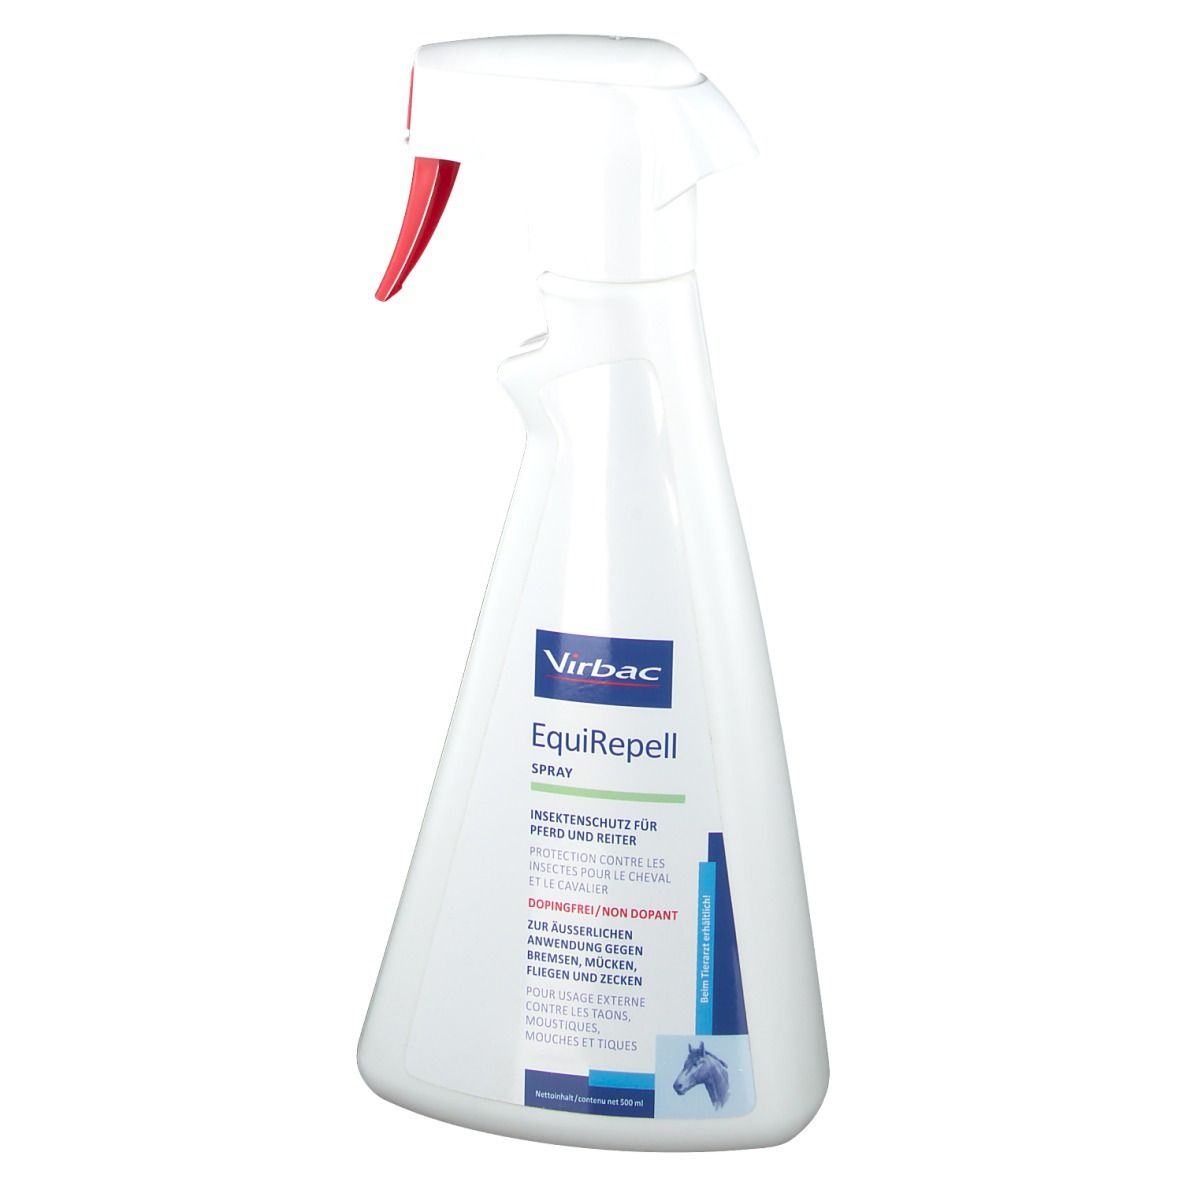 EquiRepell Spray